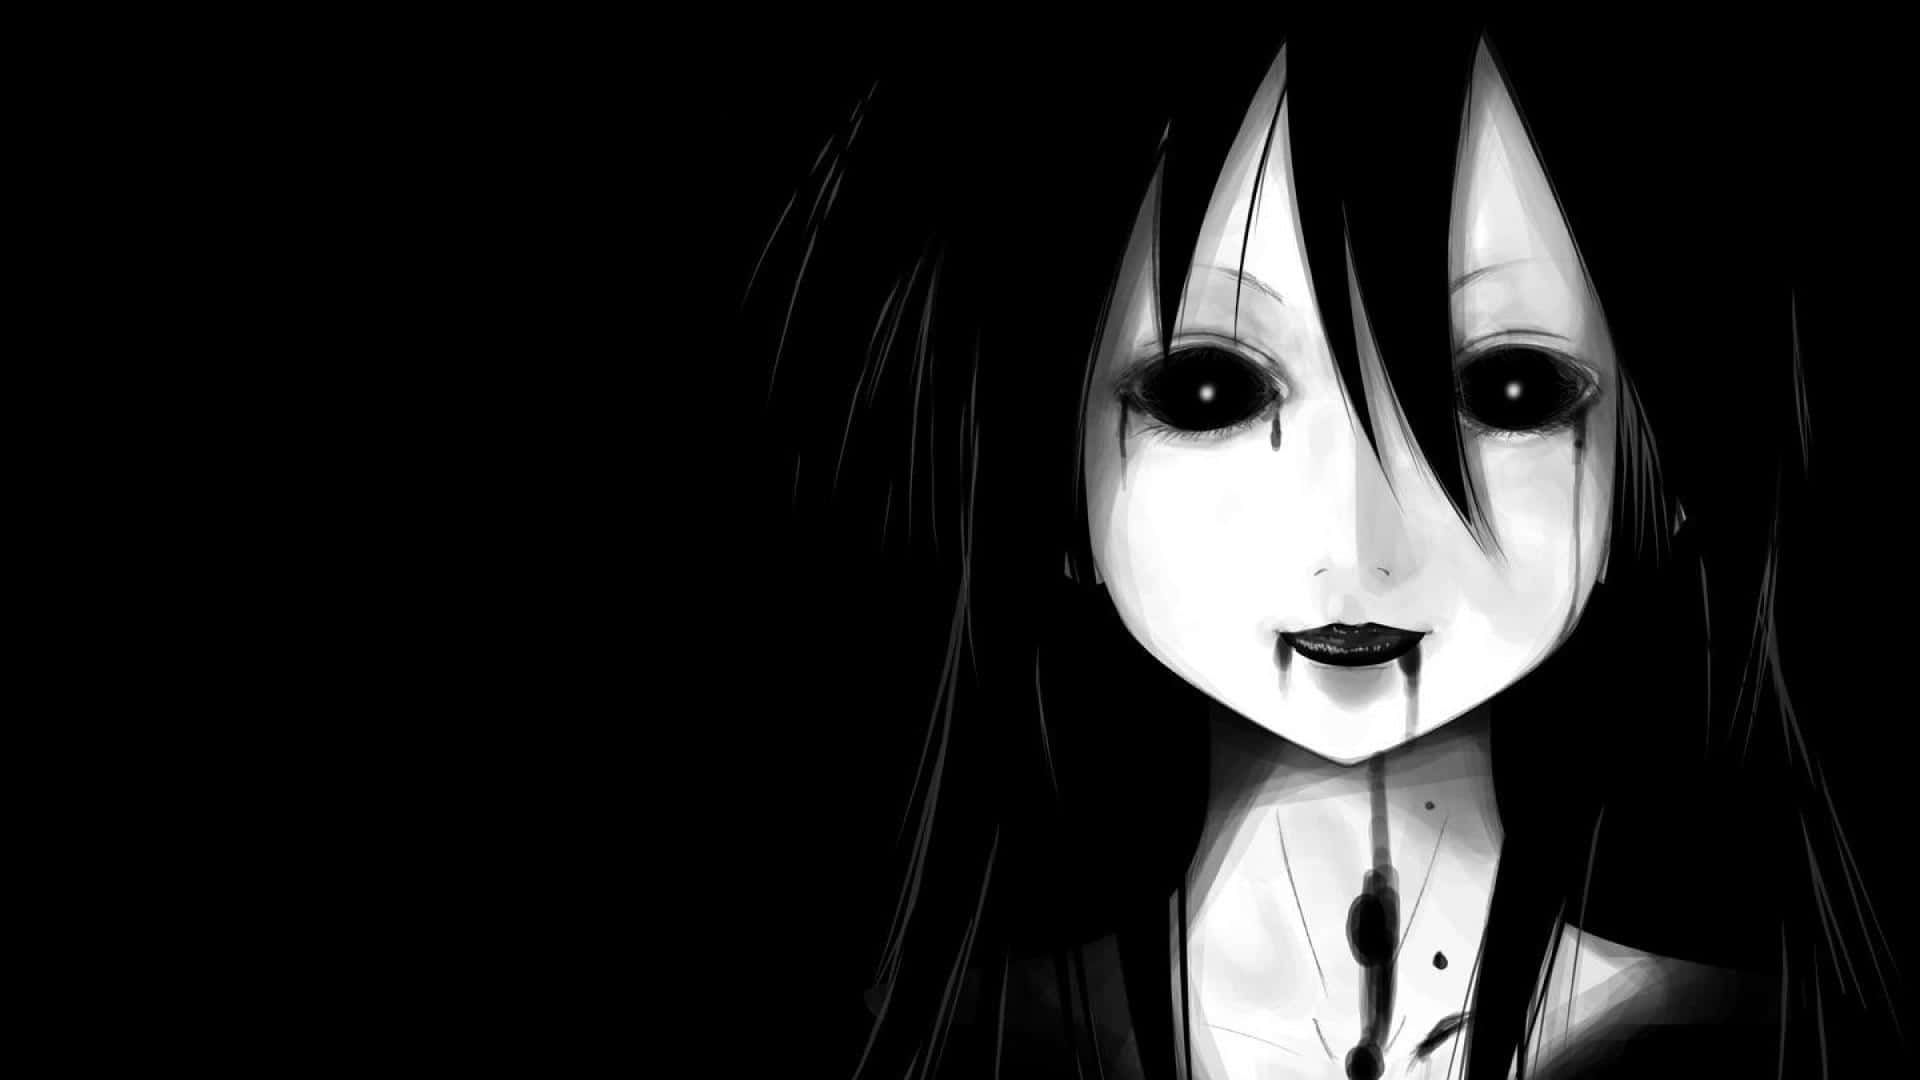 Creepy Dark Anime Girl with Skulls | Sticker